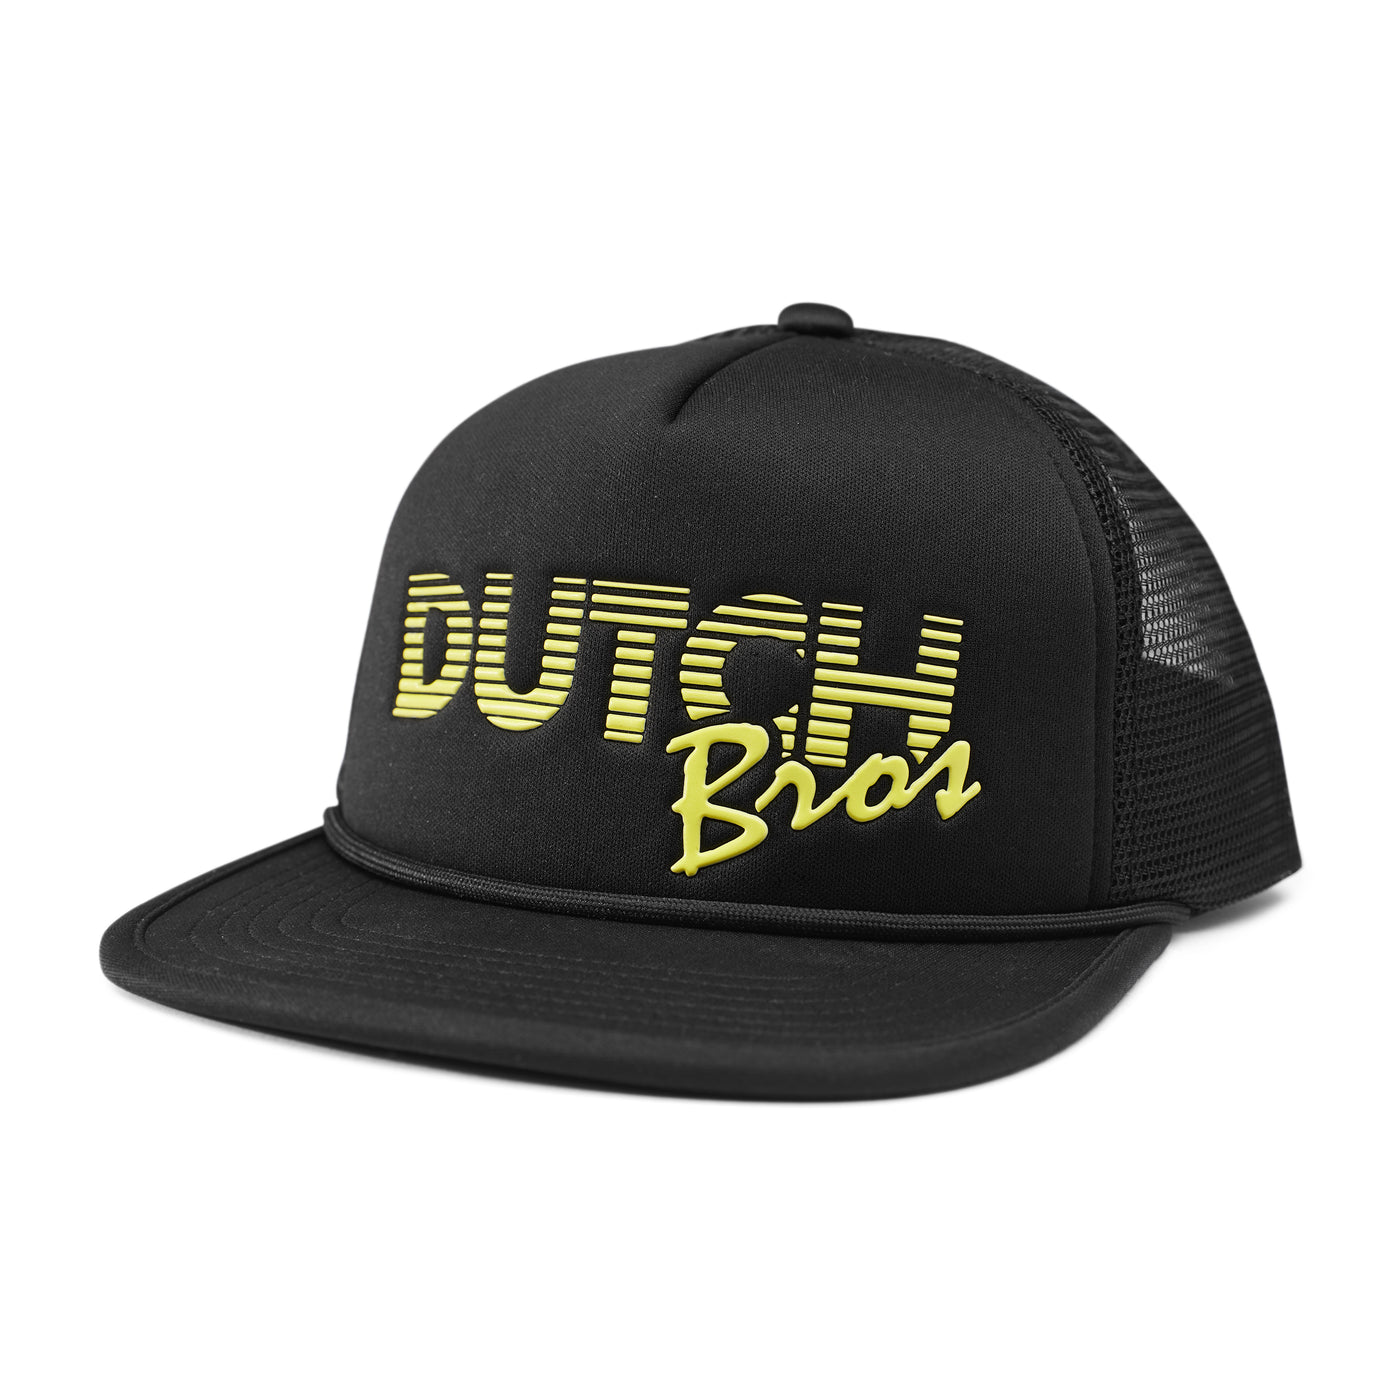 Nite Cap - Neon Dutch Bros Hat